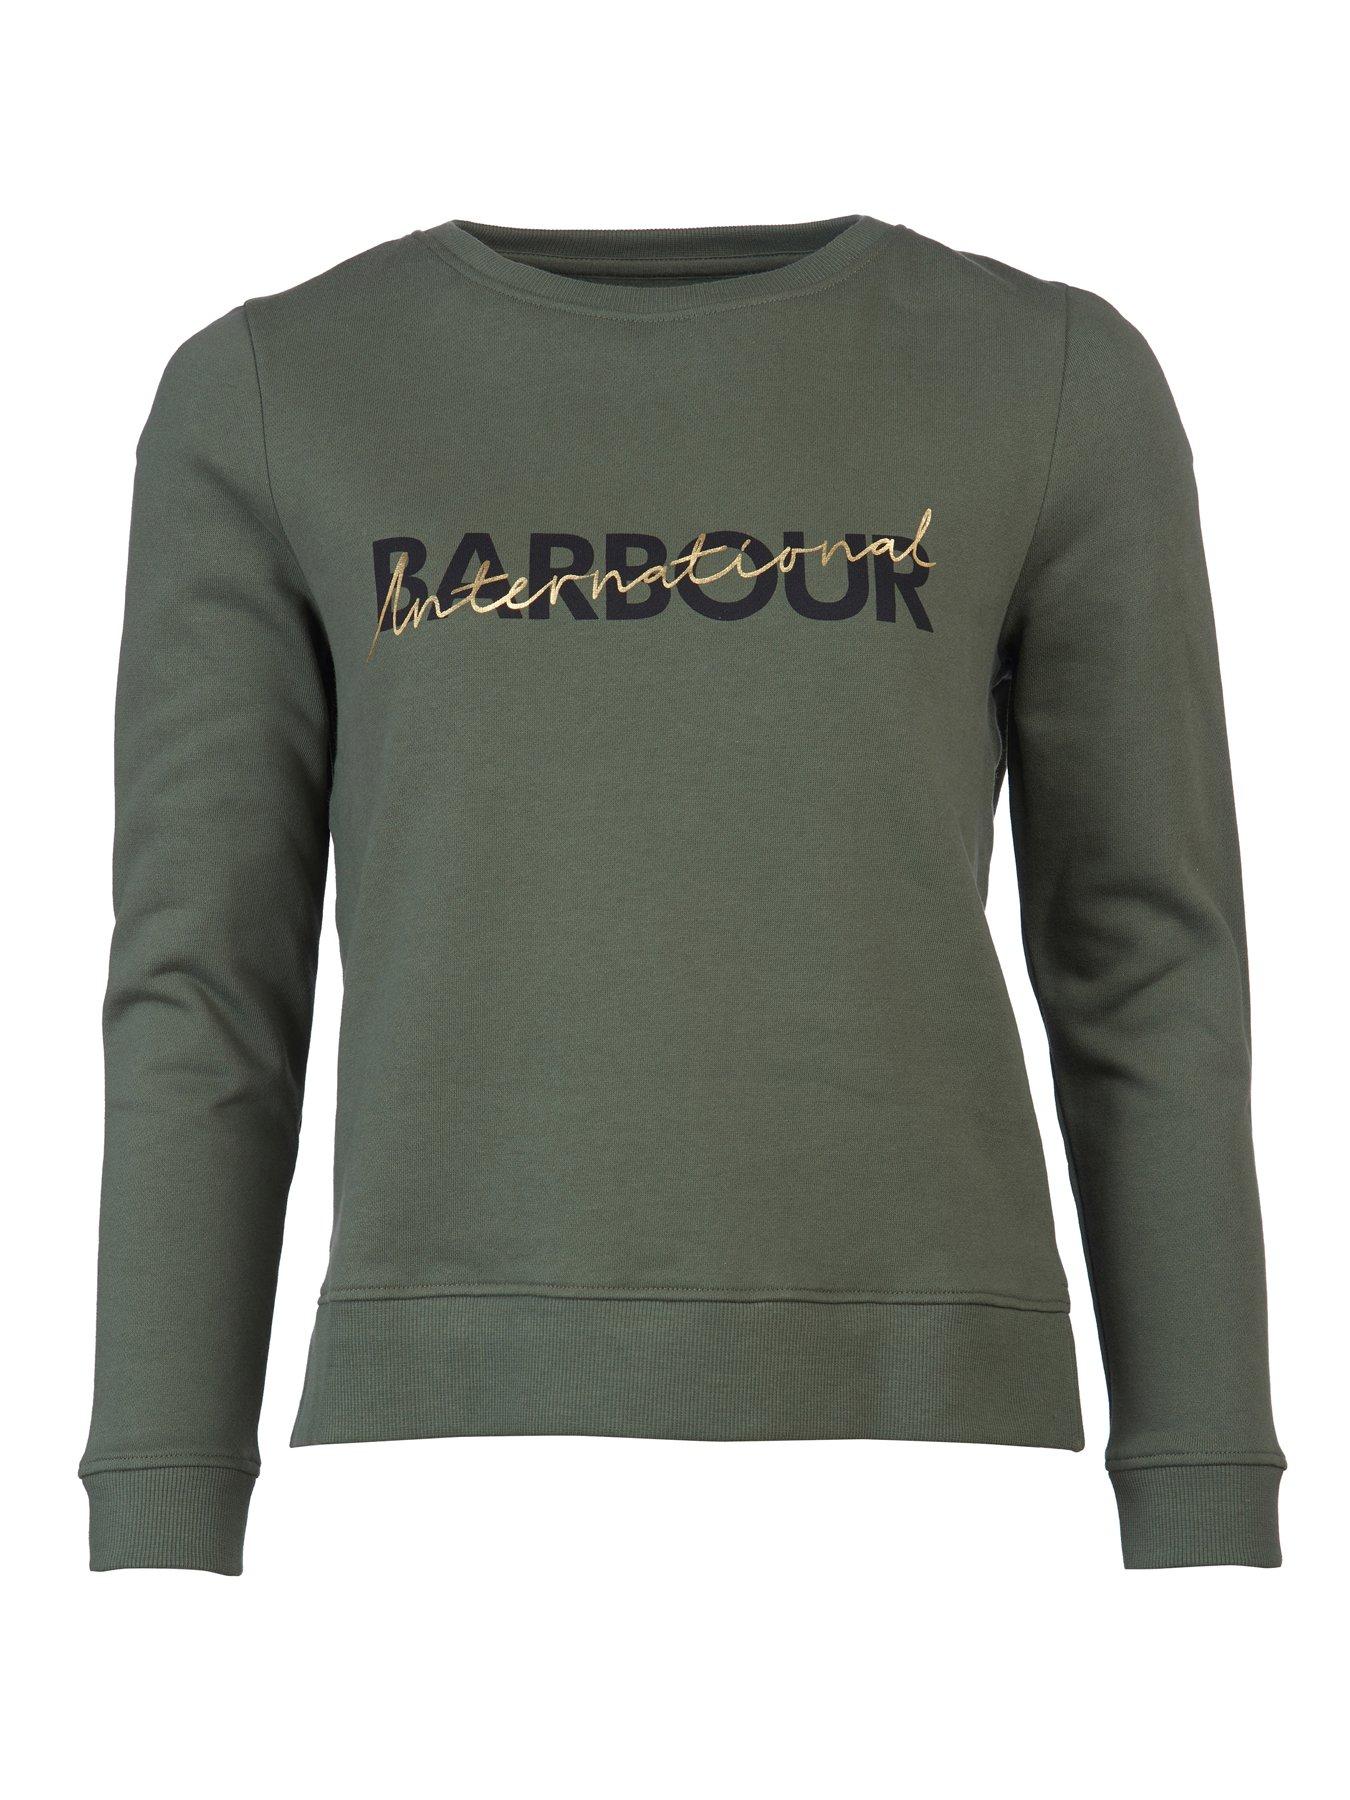 barbour international sweatshirt womens